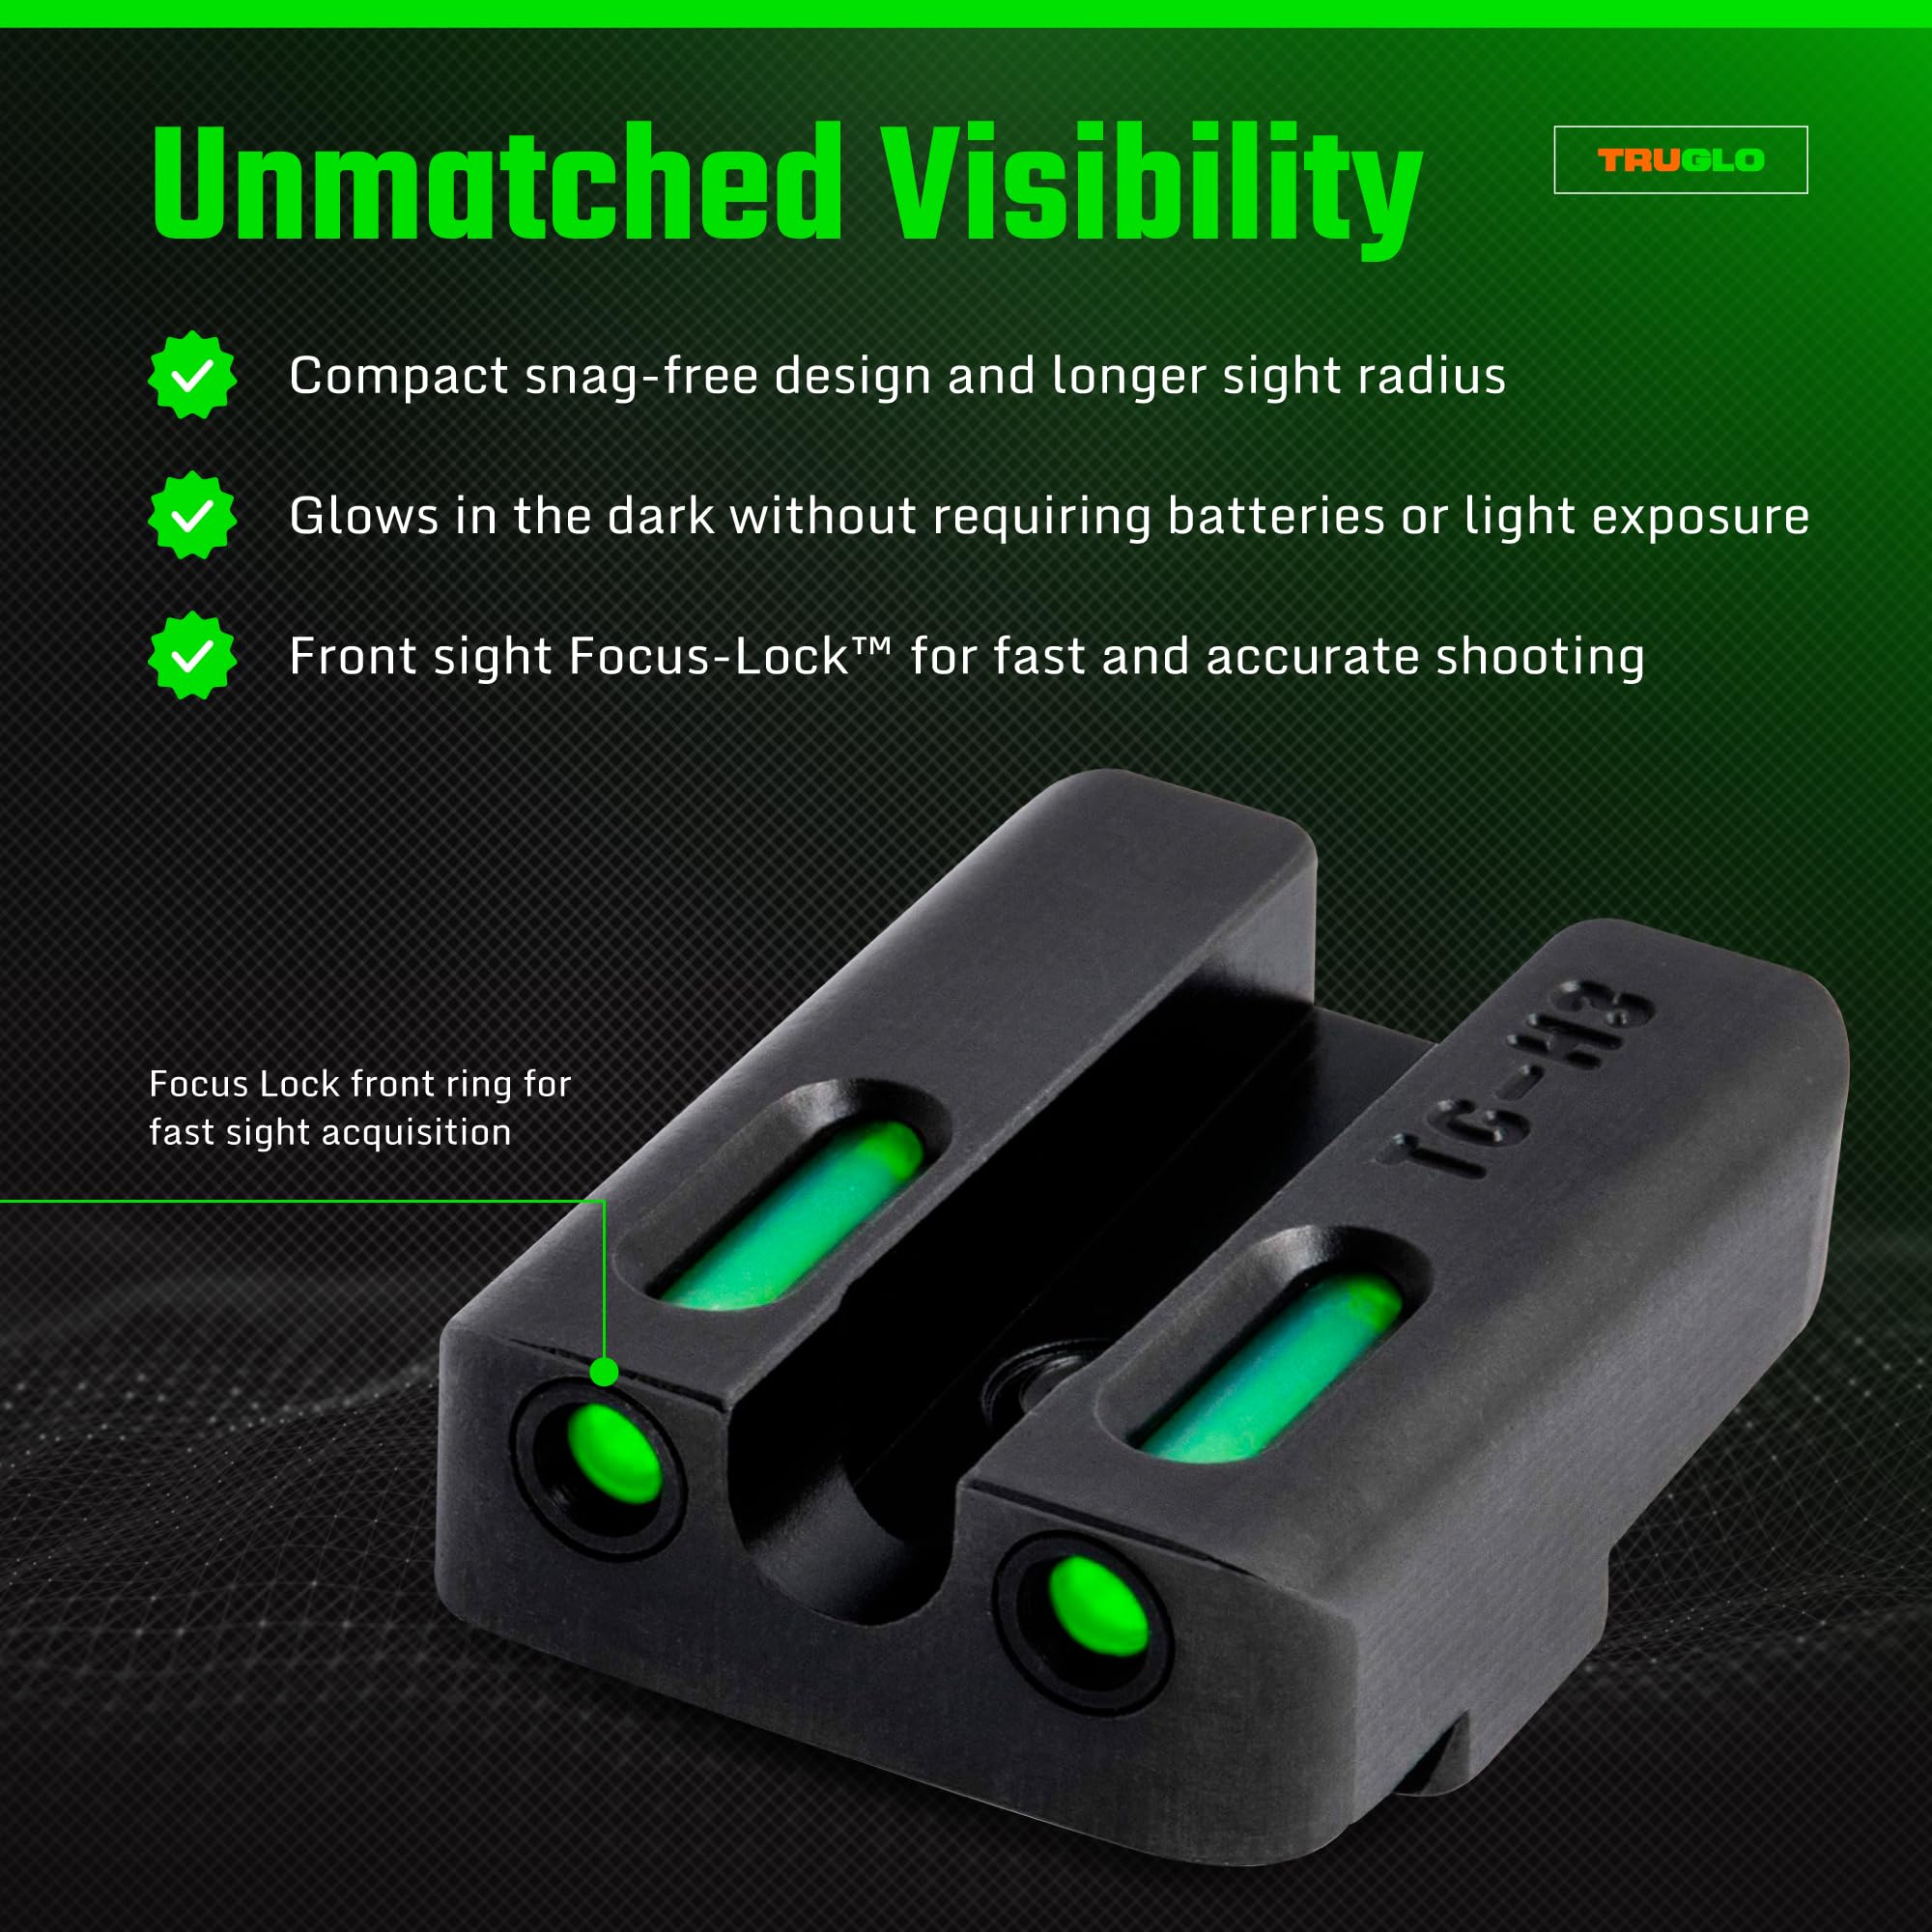 Truglo TFX PRO Handgun Sight, Glowing Shock Proof Tritium and Fiber Optic Night Sight for Handguns, Compact, Durable, and Snag Free Sight